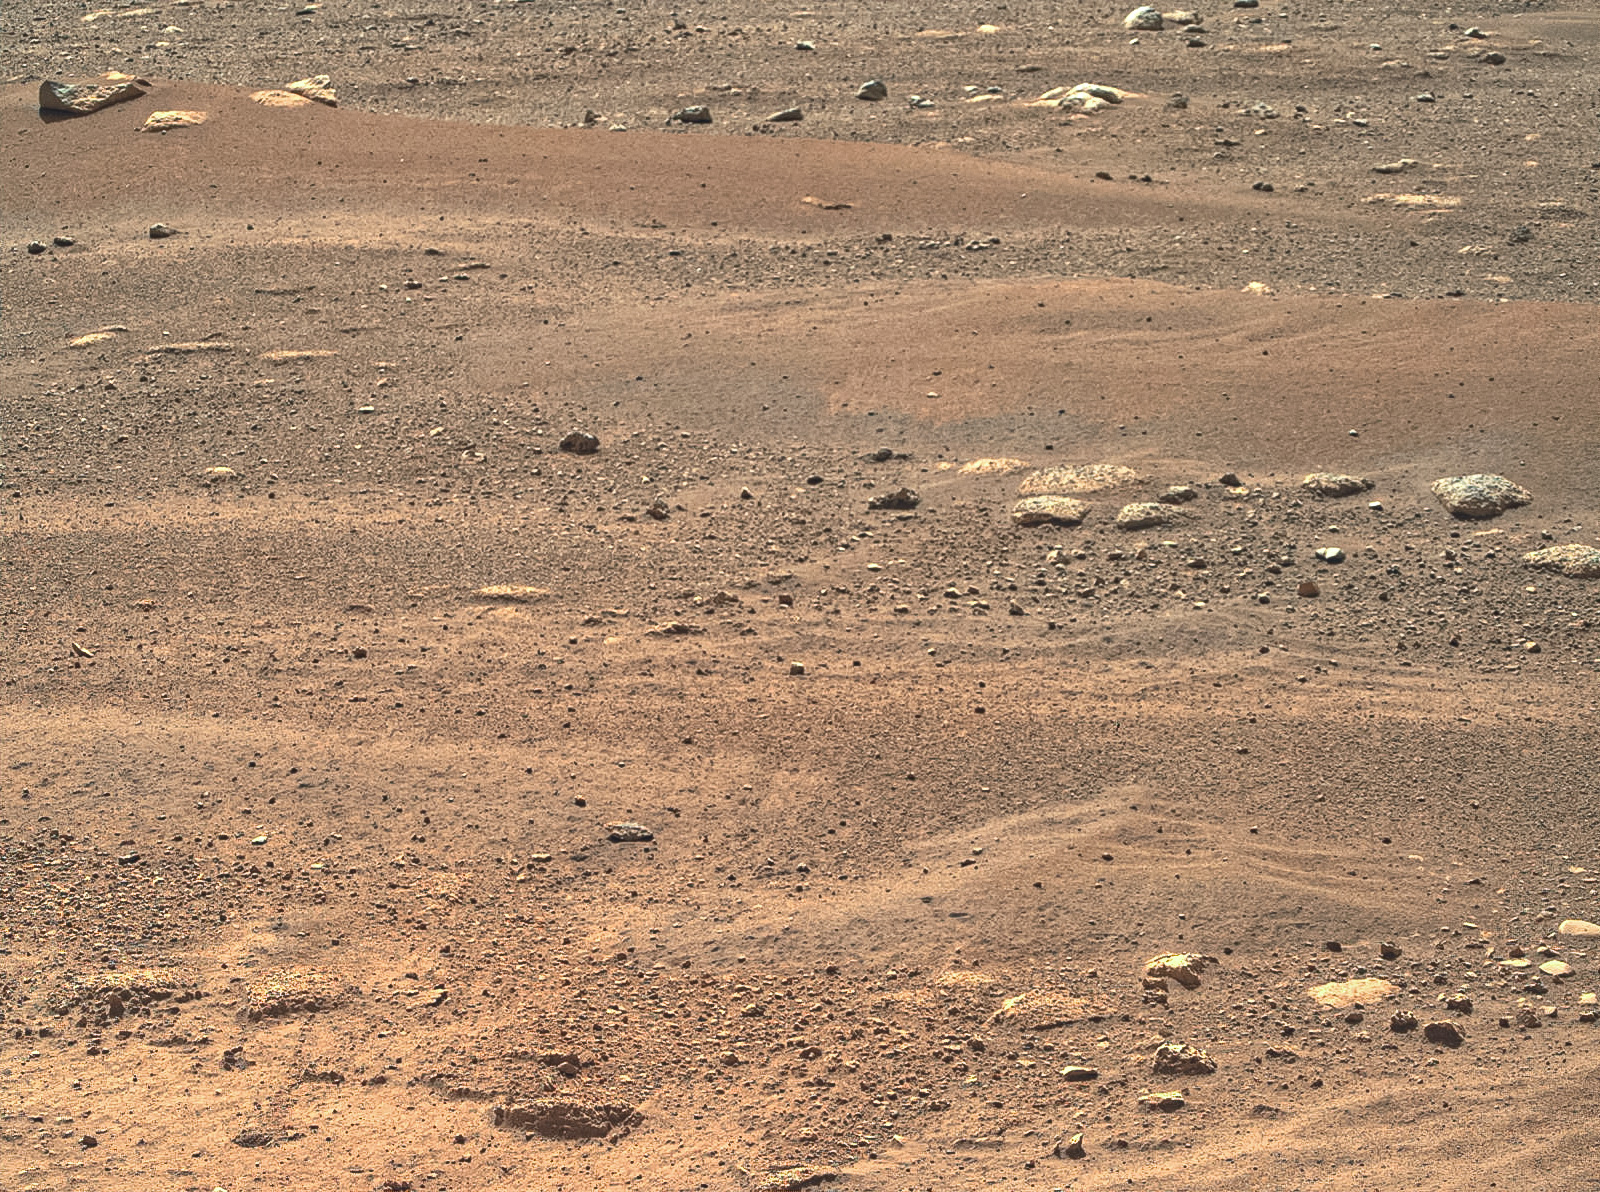 Фото Марса 2022 Года